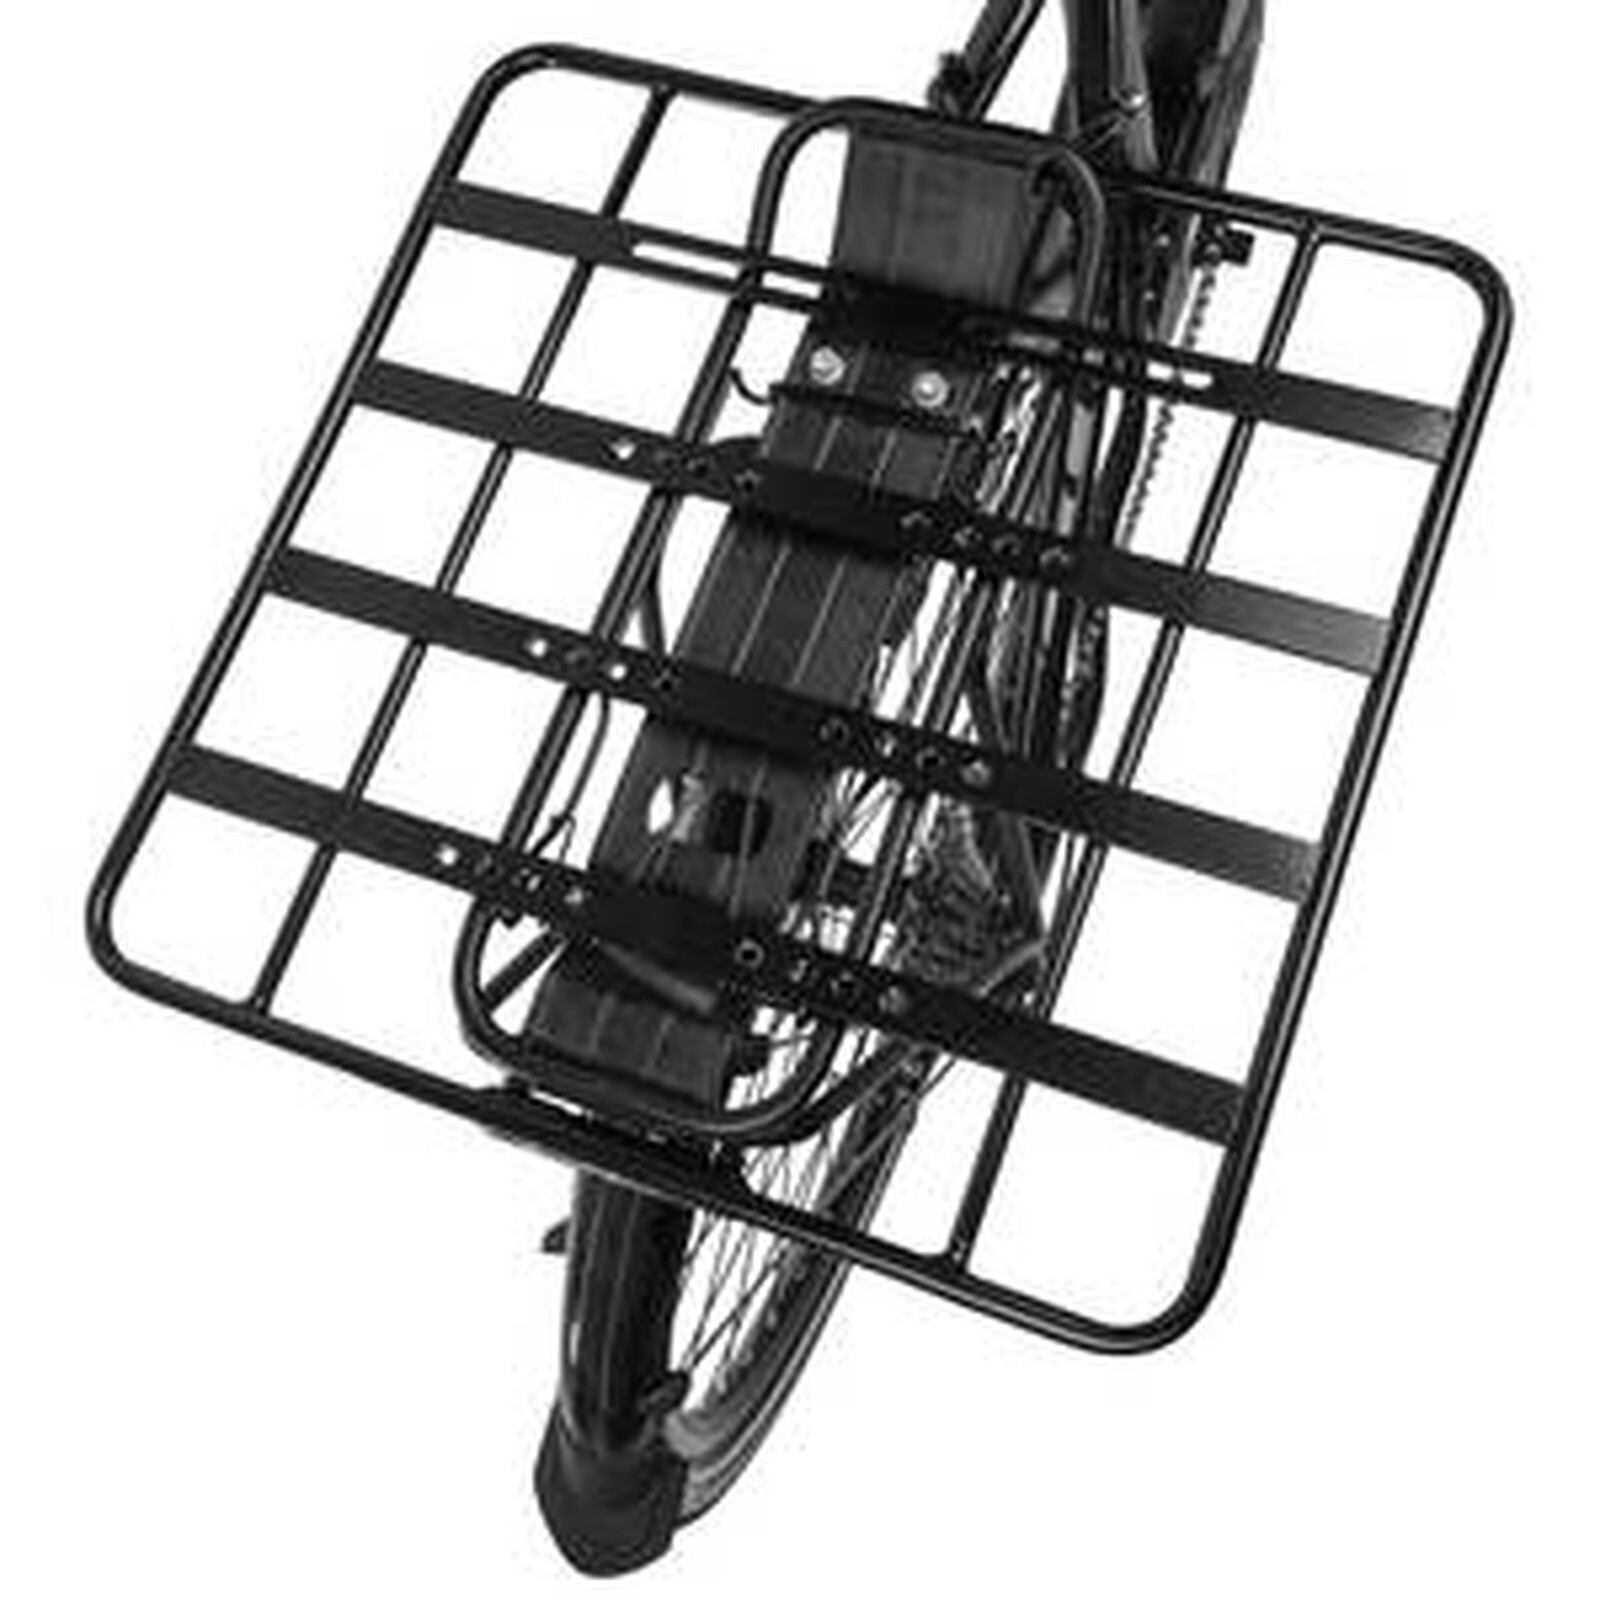 https://www.radversender.de/media/image/product/15841/lg/transport-platte-fahrrad-gepaecktraeger-hinten-universelle-erweiterung-transport.jpg